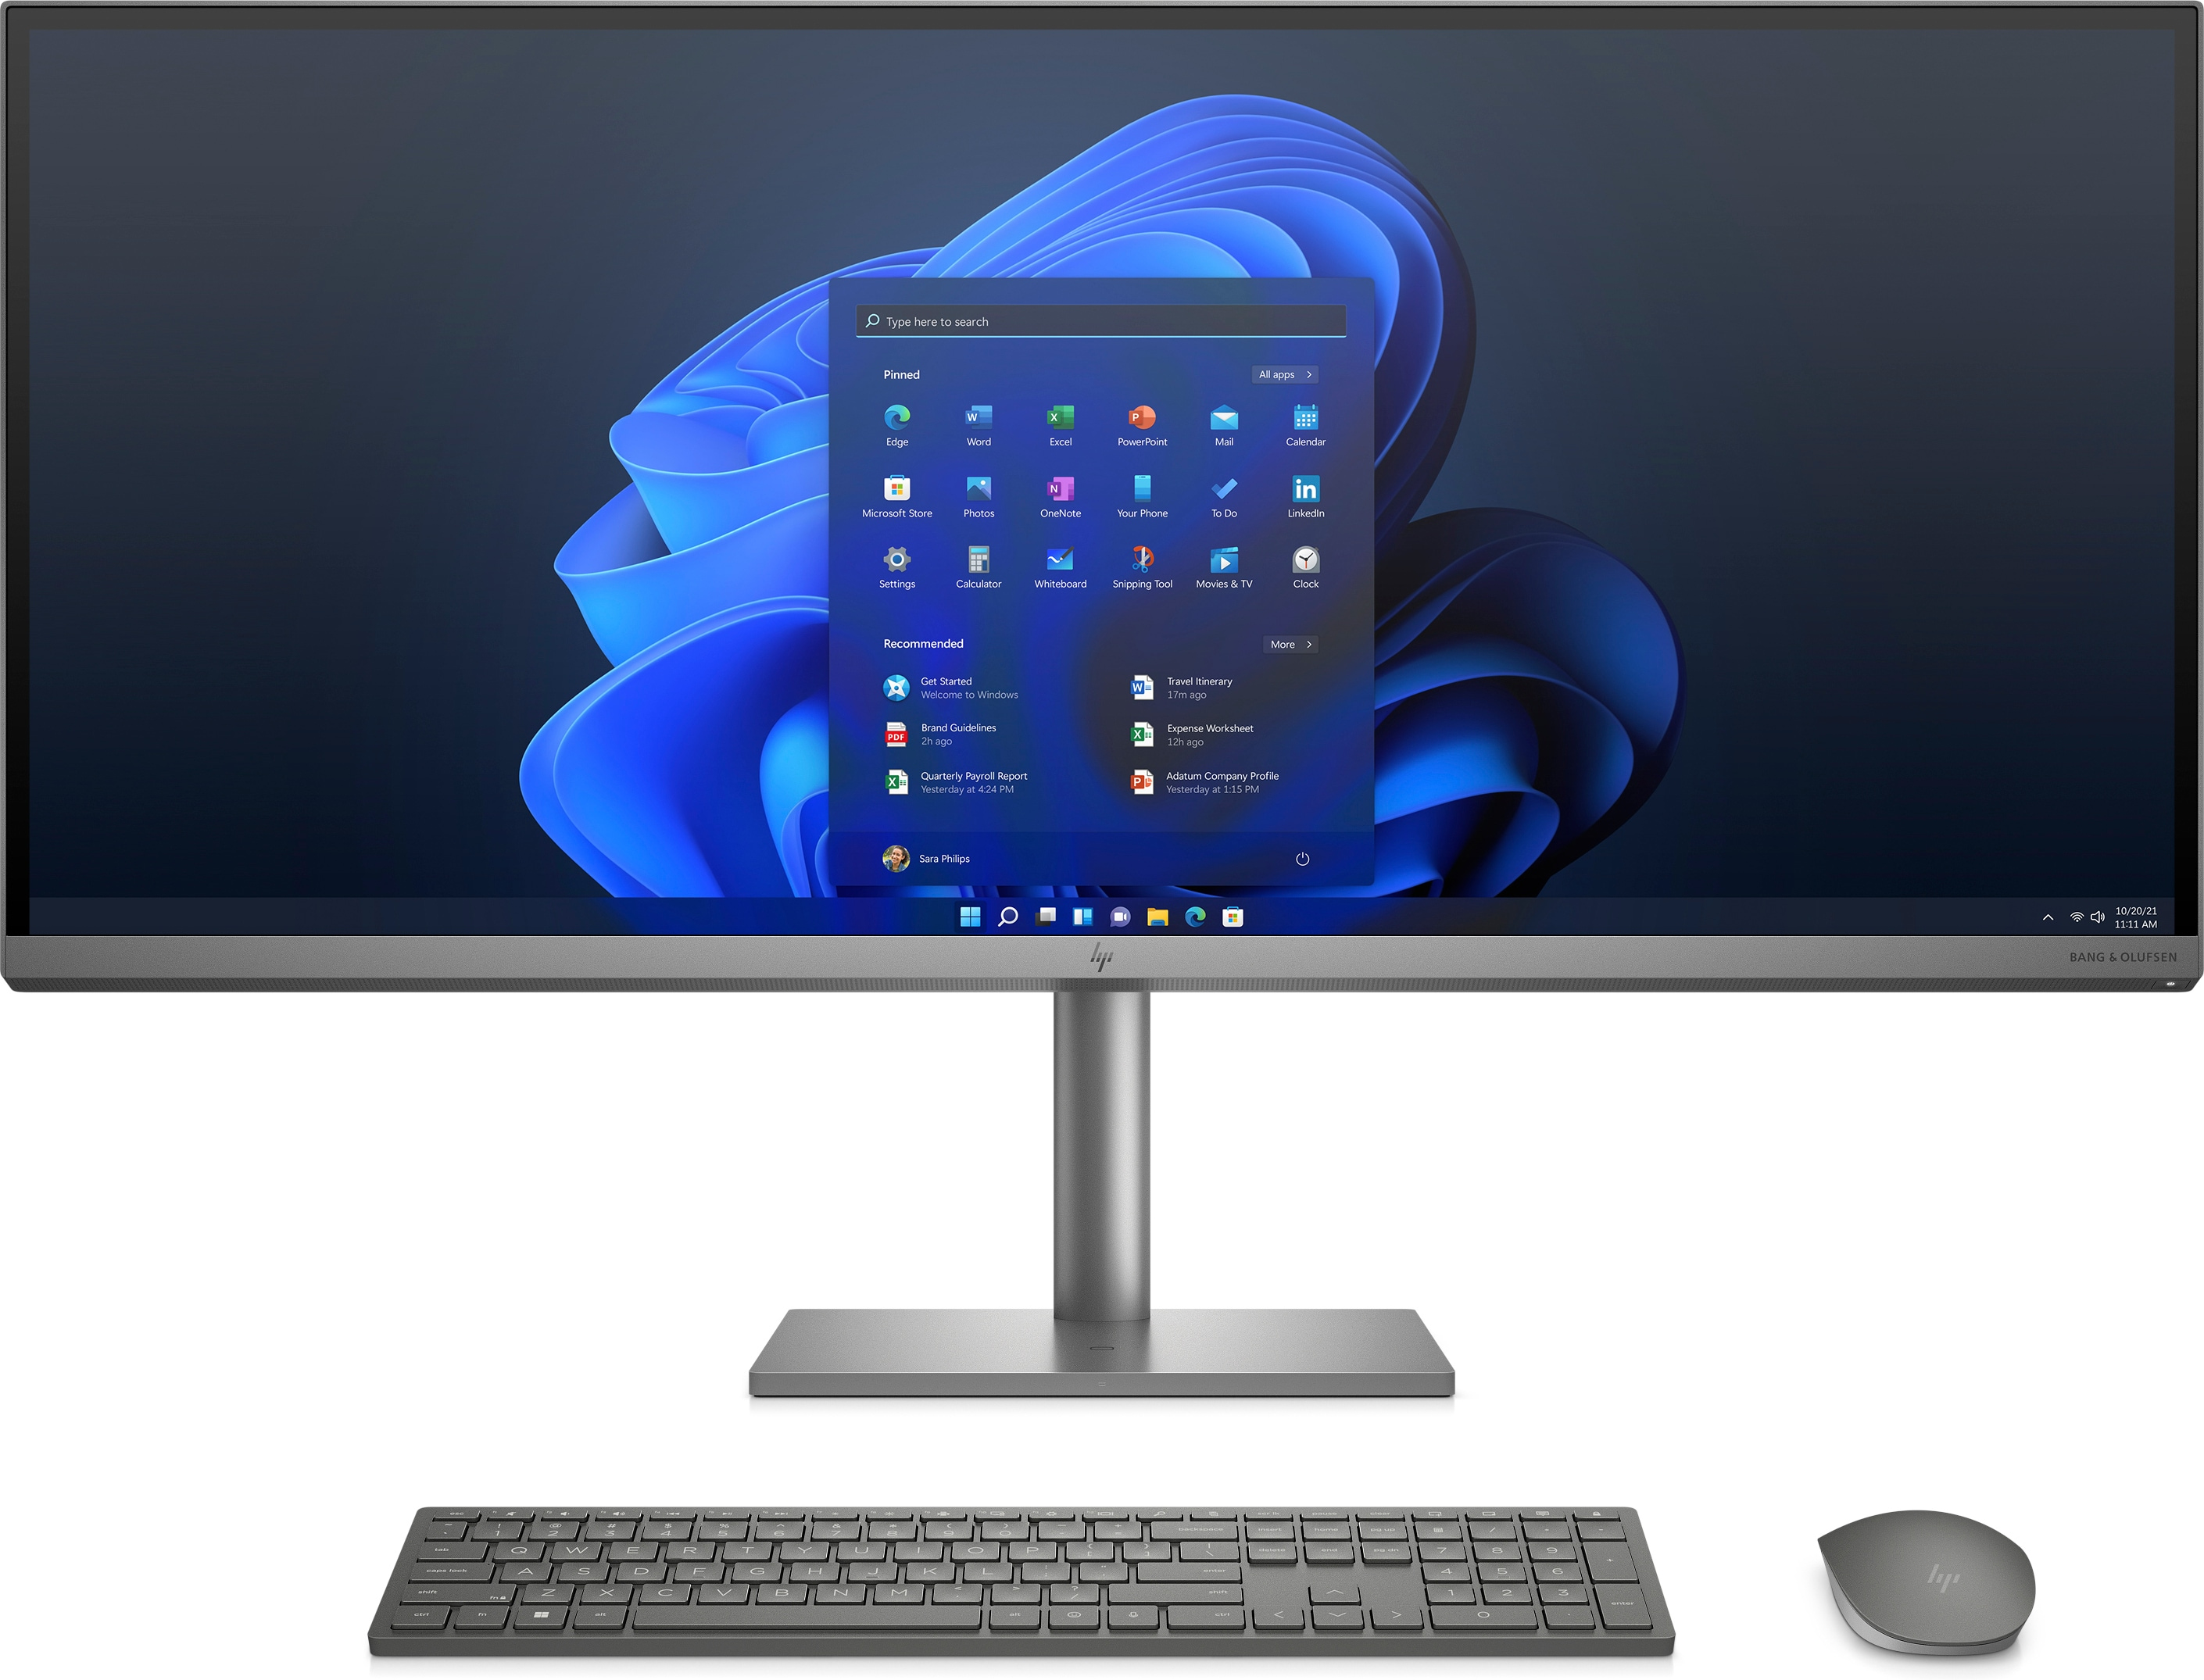 Shop Windows All-in-One Desktop Computers